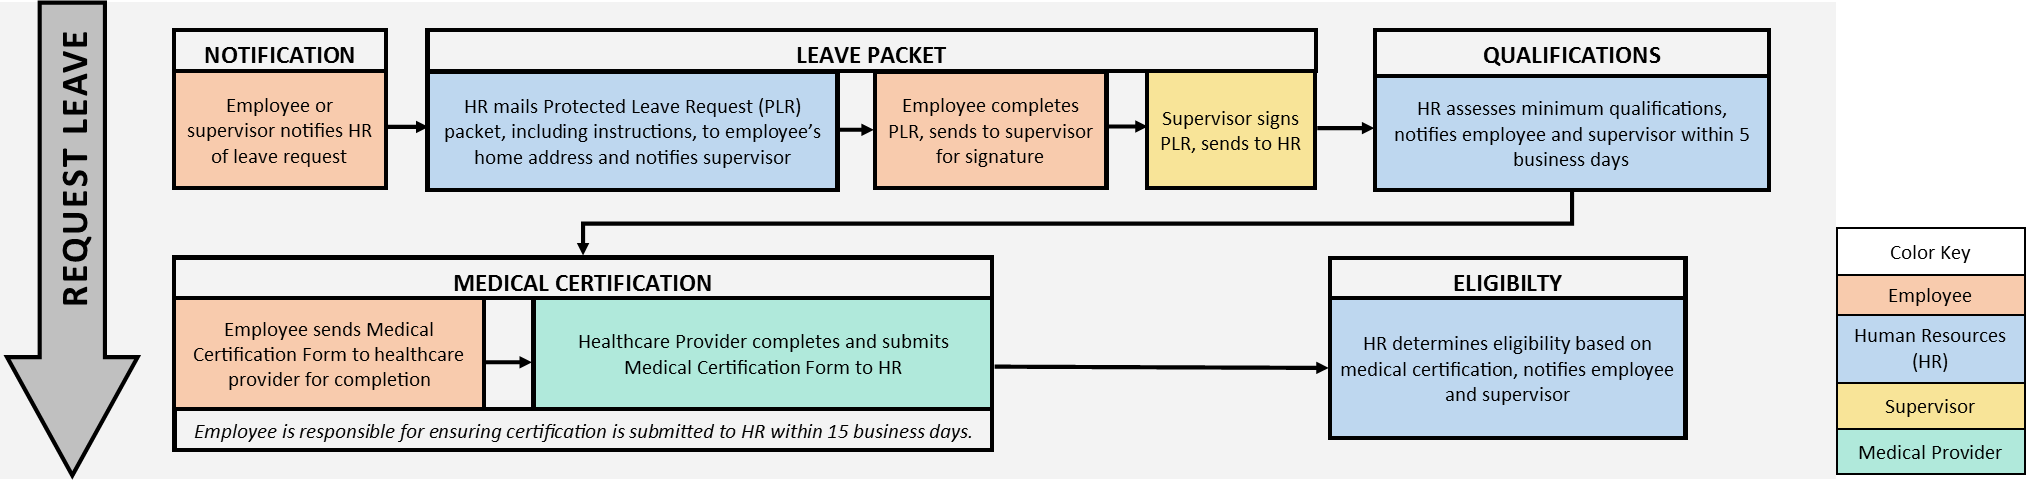 FMLA process for requesting leave